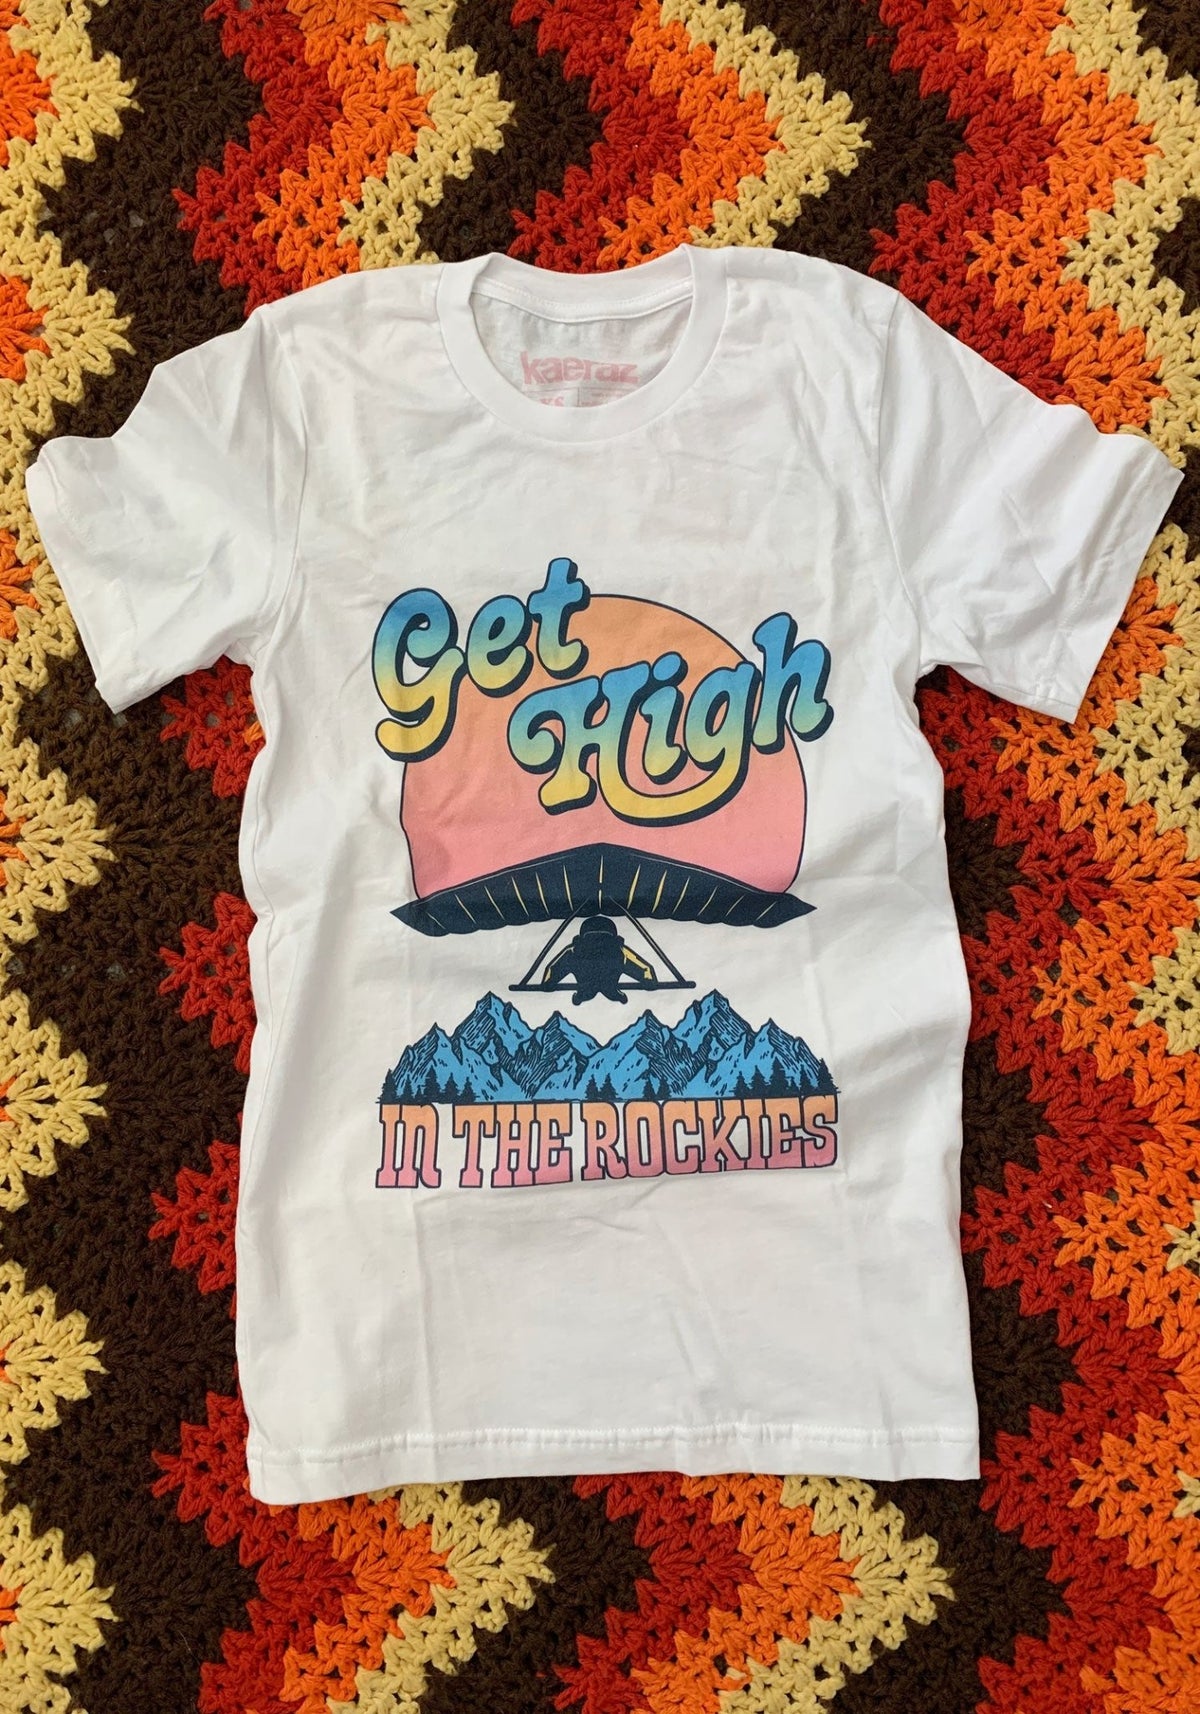 Catch The Colorado Rockies Fever T-Shirt T-Shirt - TeeNavi